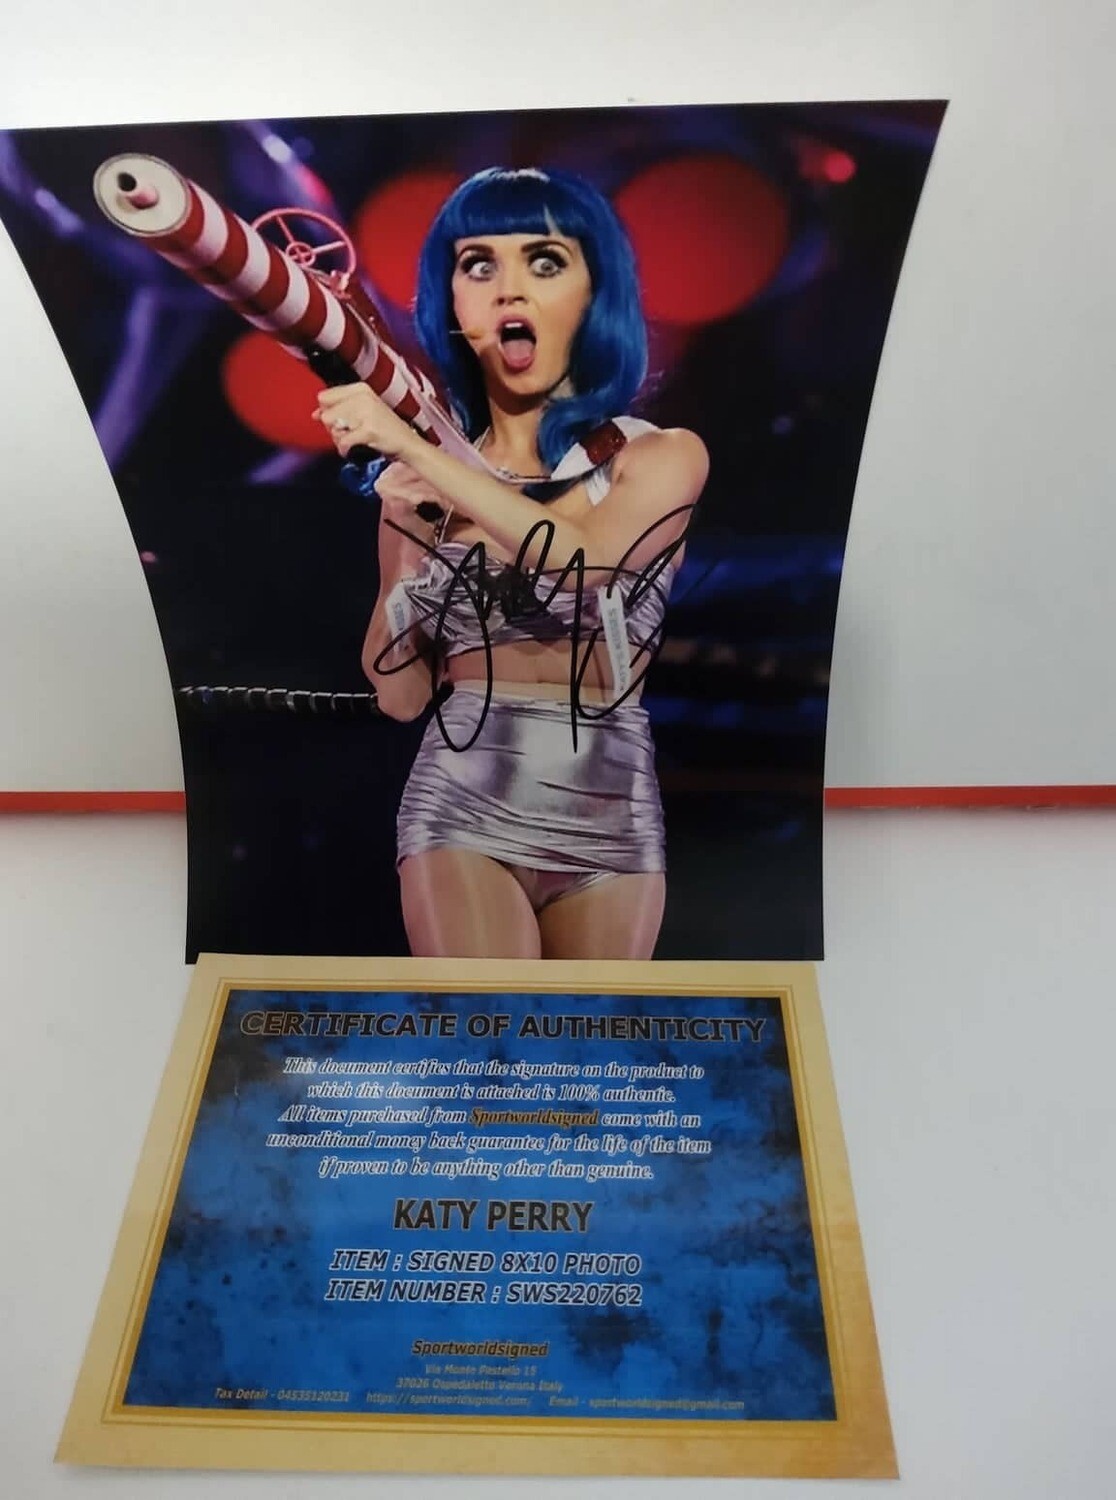 FOTO  Katy Perry Autografata Signed + COA Photo  Katy Perry  Autografata Signed